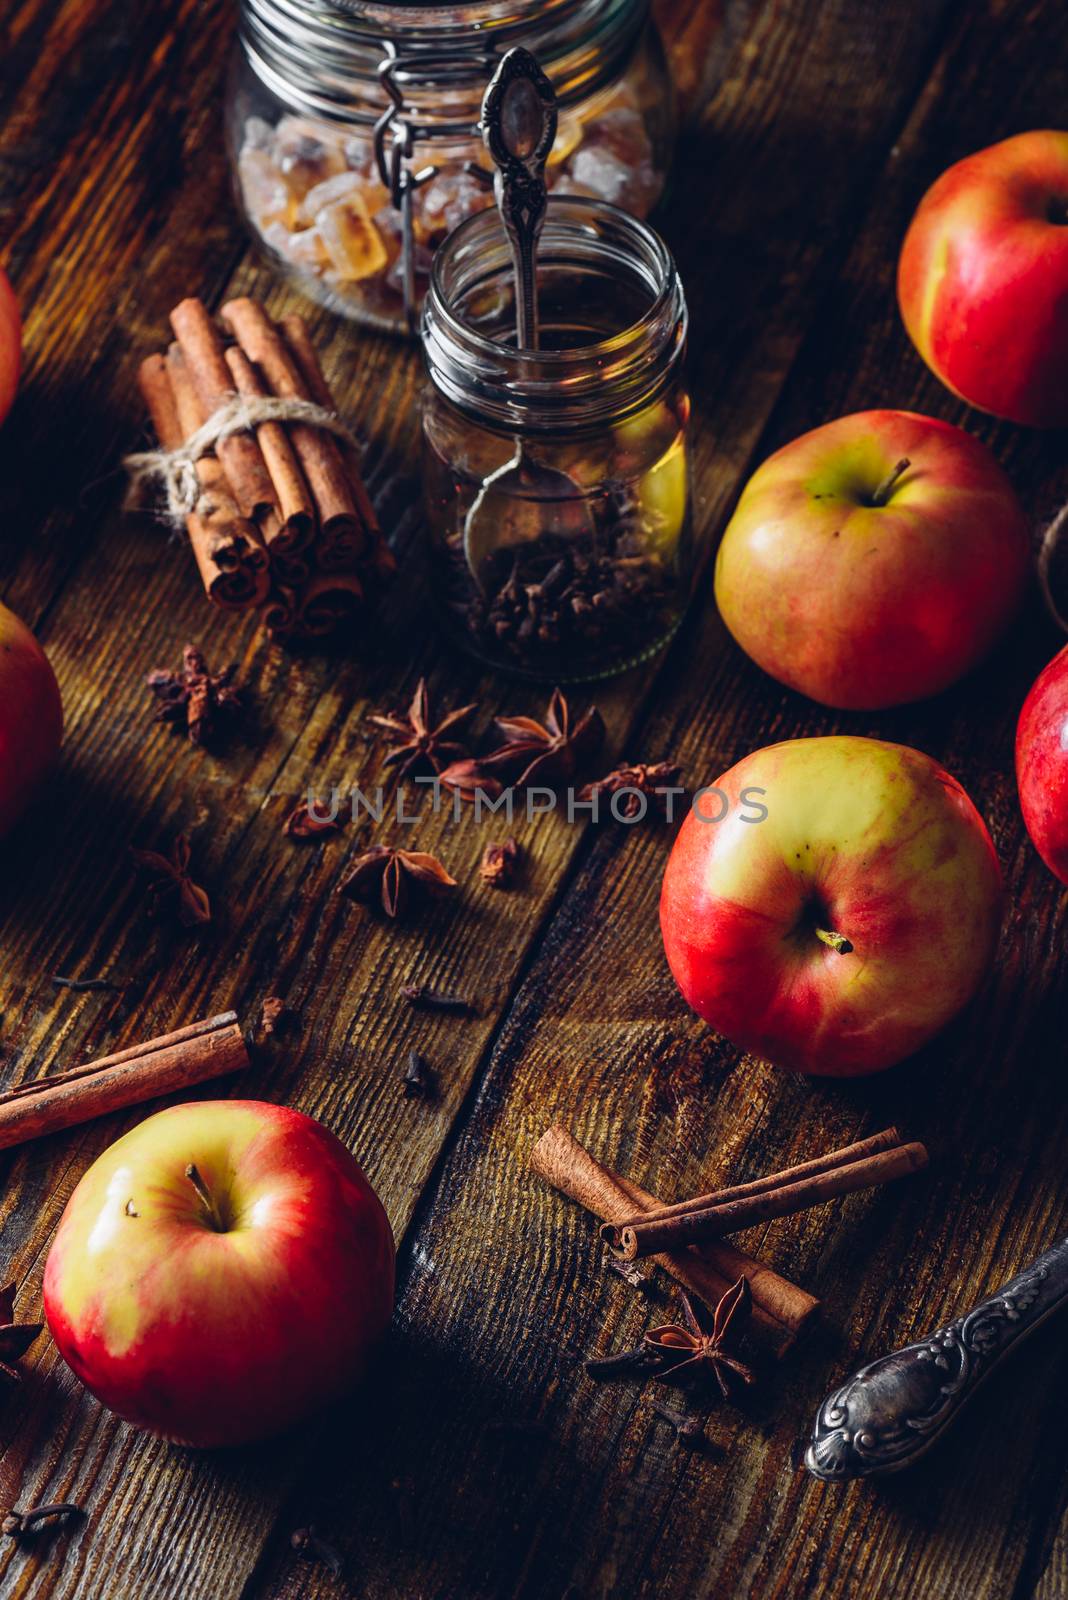 Apples with Clove, Cinnamon and Anise Star. by Seva_blsv